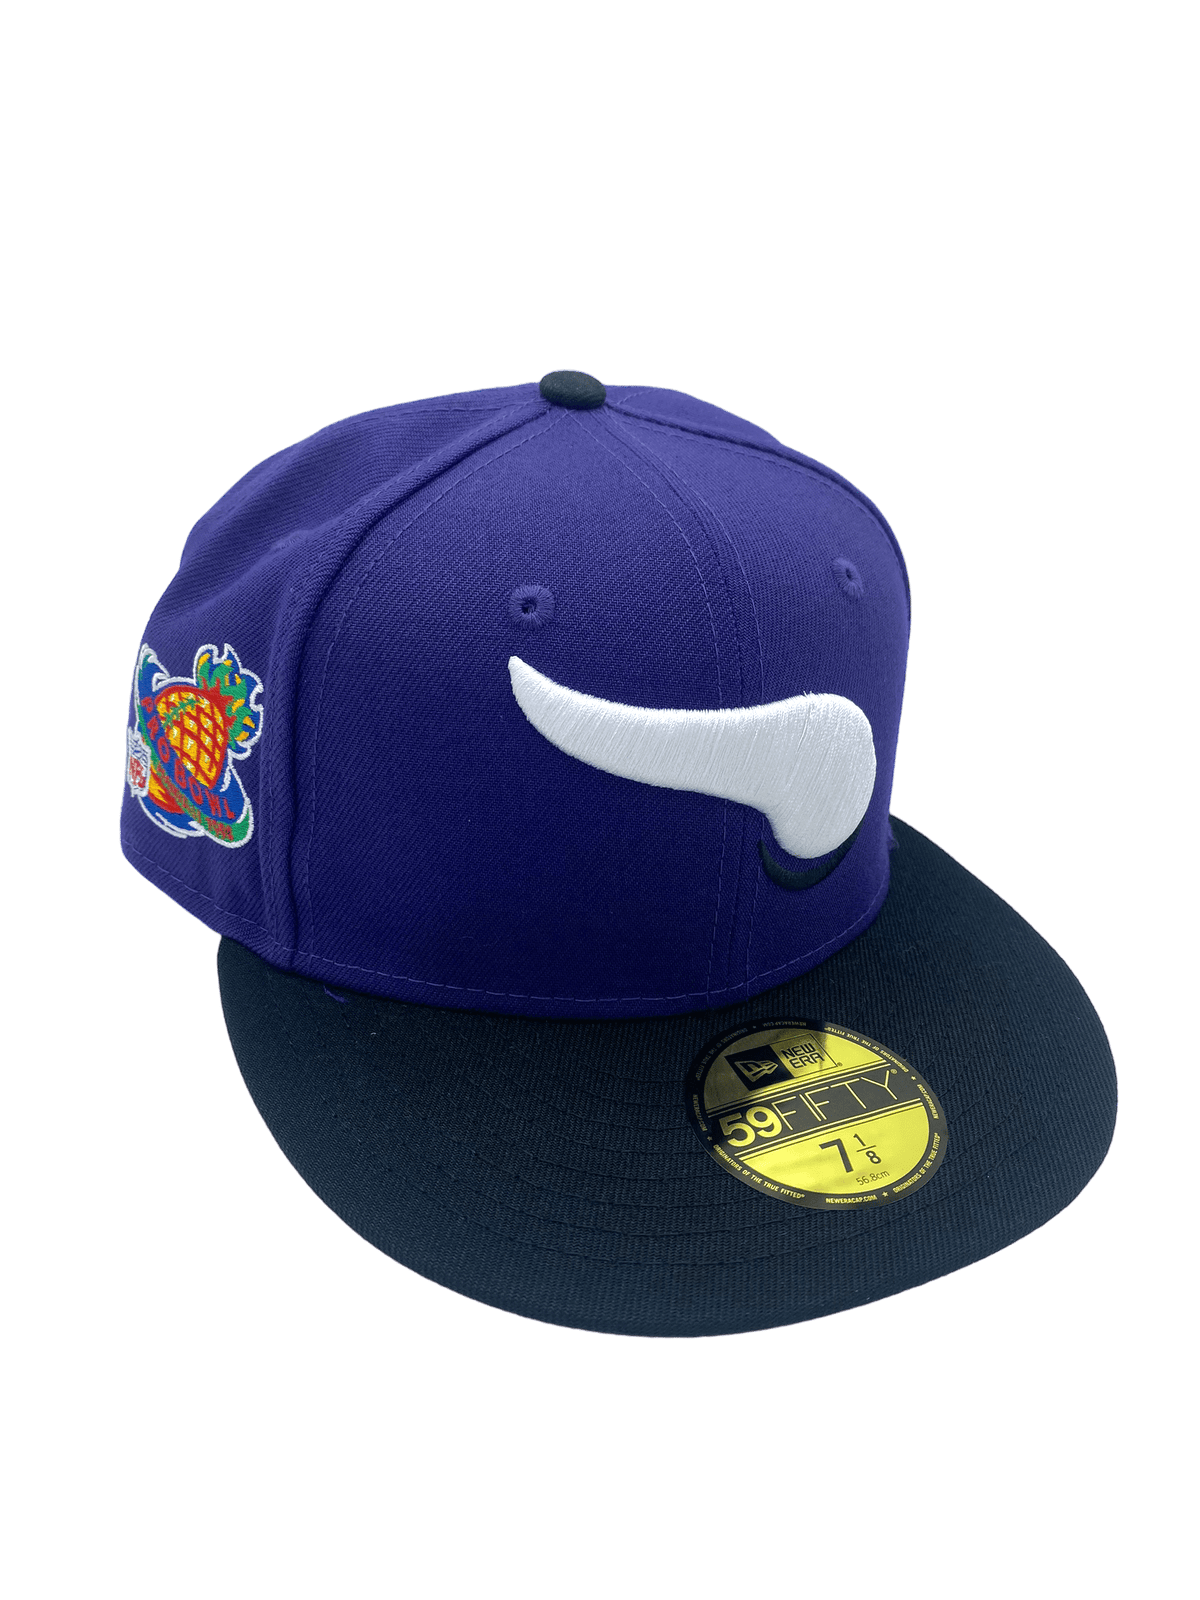 New Era Caps New Era 59fifty Original Basic Baseball Cap Purple